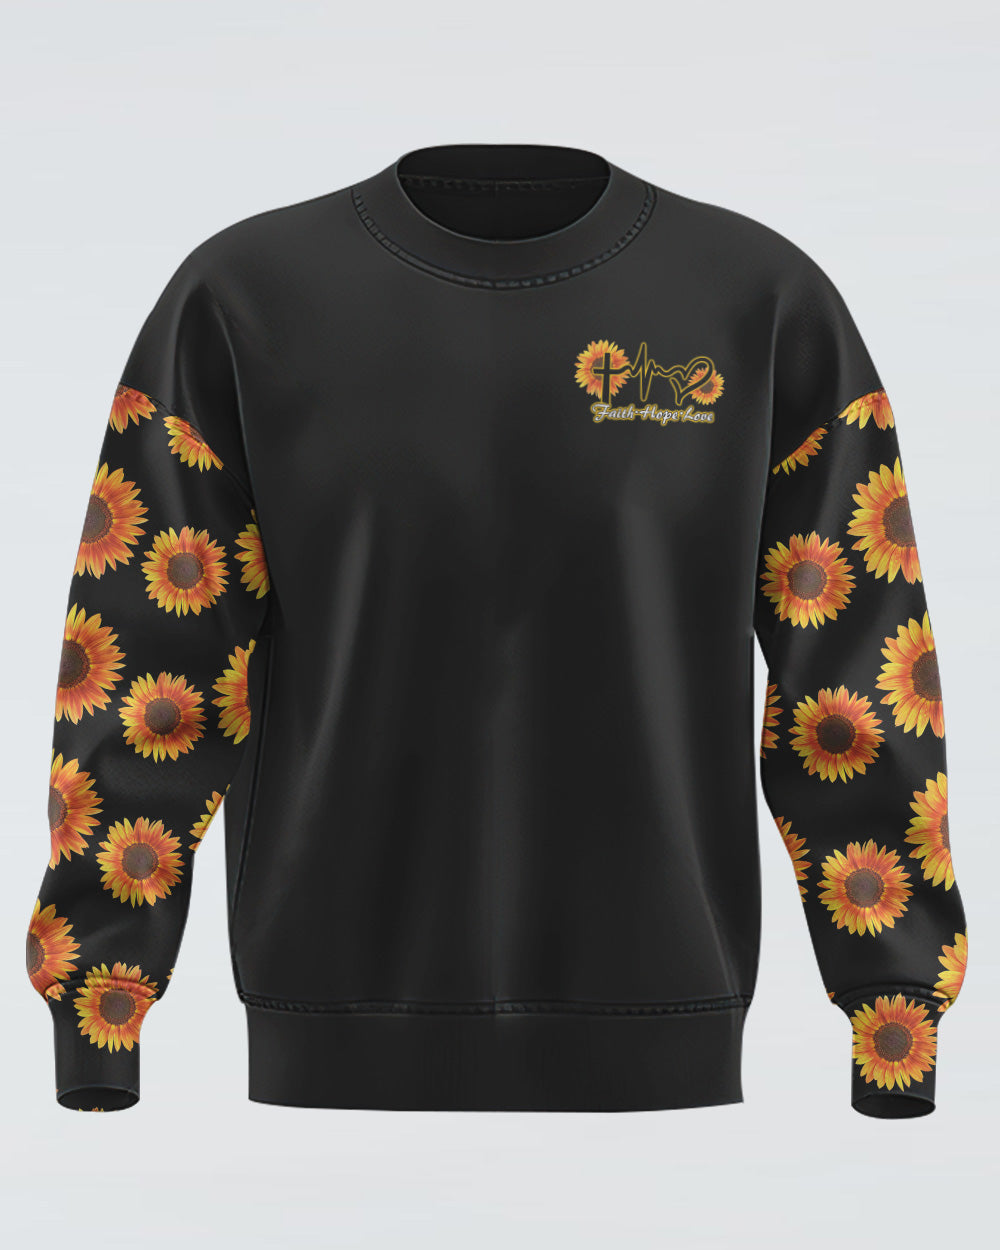 Sunflower Faith Cross Light Wings Women's Christian Sweatshirt